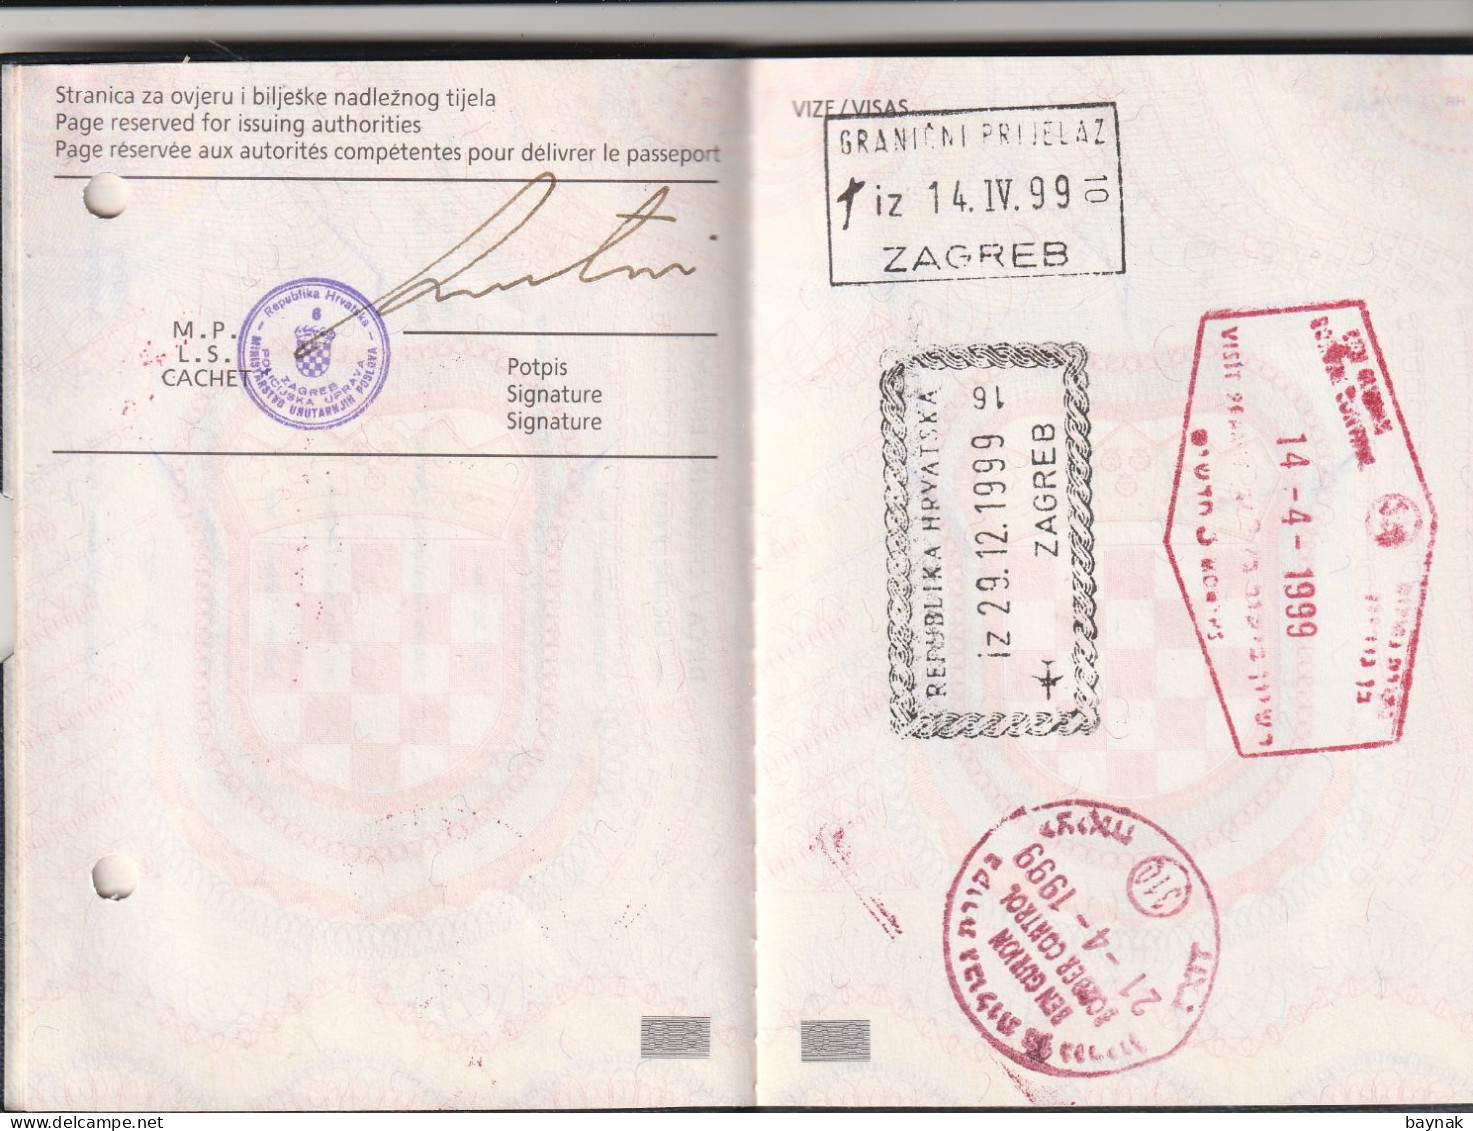 C144 -   CROATIA  - PASSPORT  -  I. MODEL  -  LADY  - 1992  - VISA: CANADA, ISRAEL, UK, MALTA, IRELAND, MOROCCO - Historische Documenten